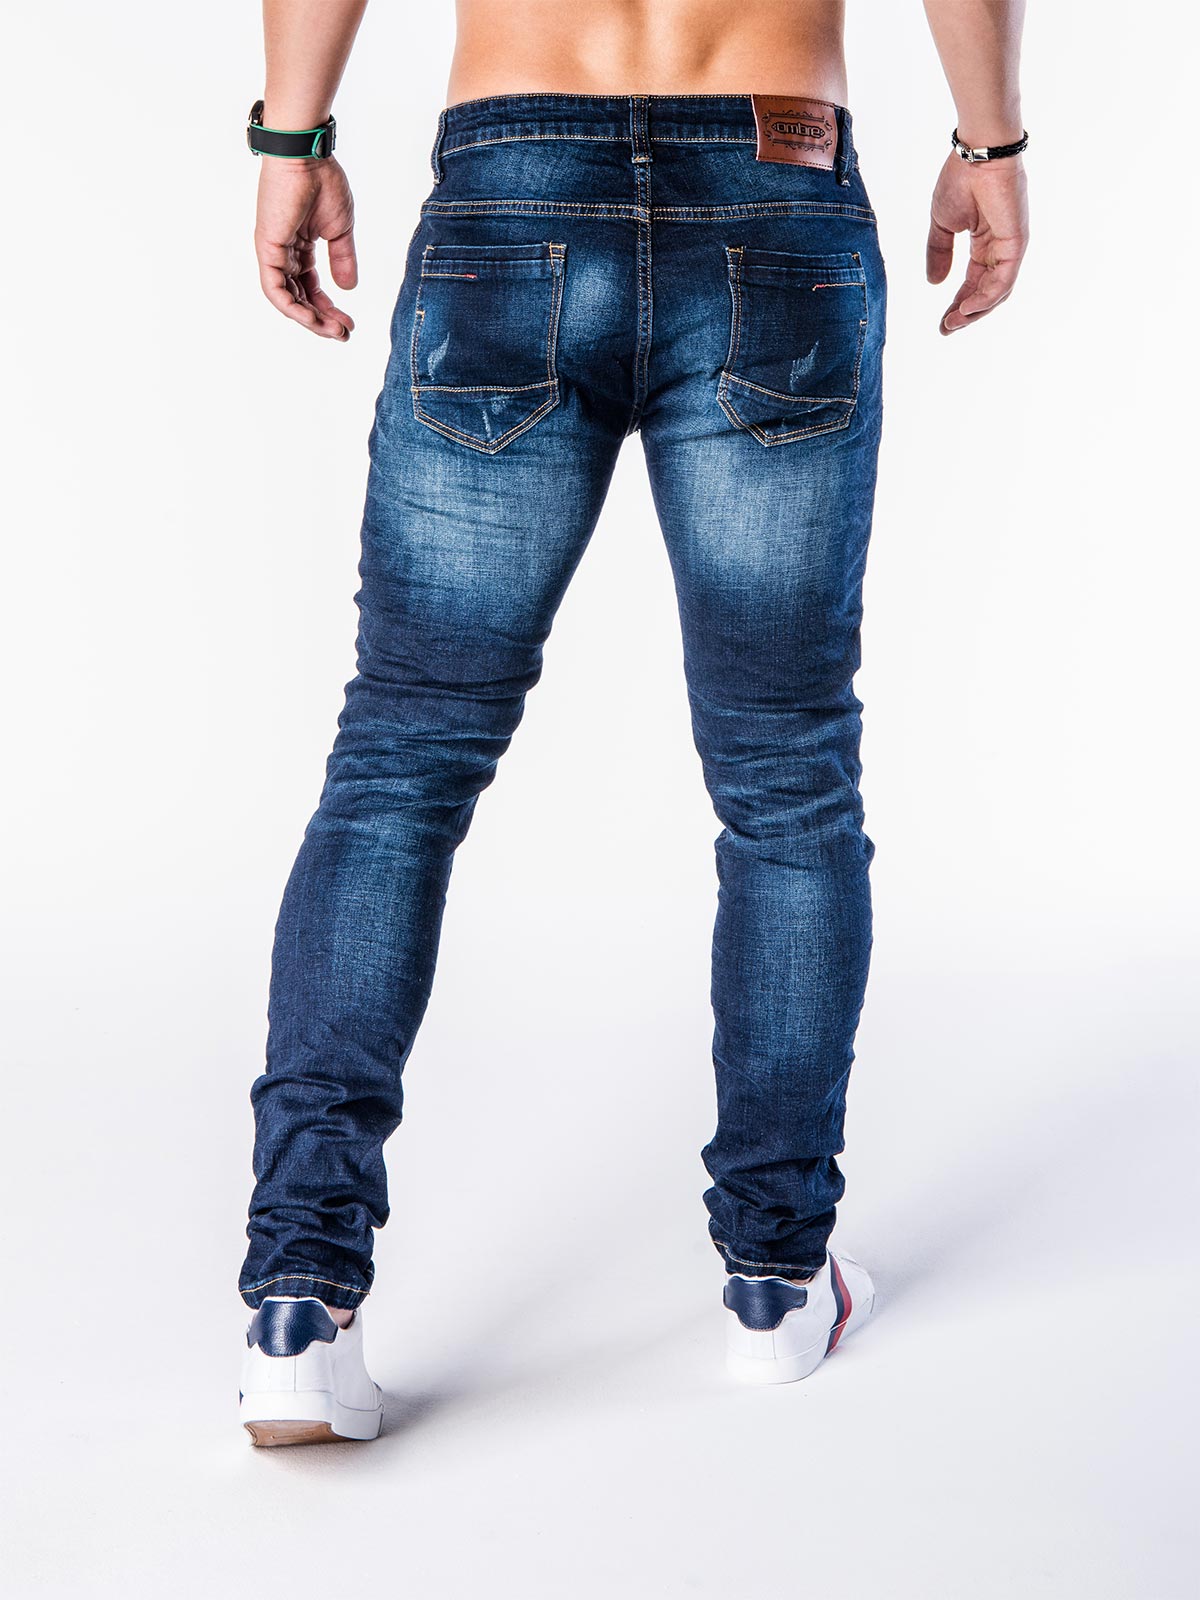 Men's denim pants P597 - navy | MODONE wholesale - Clothing For Men